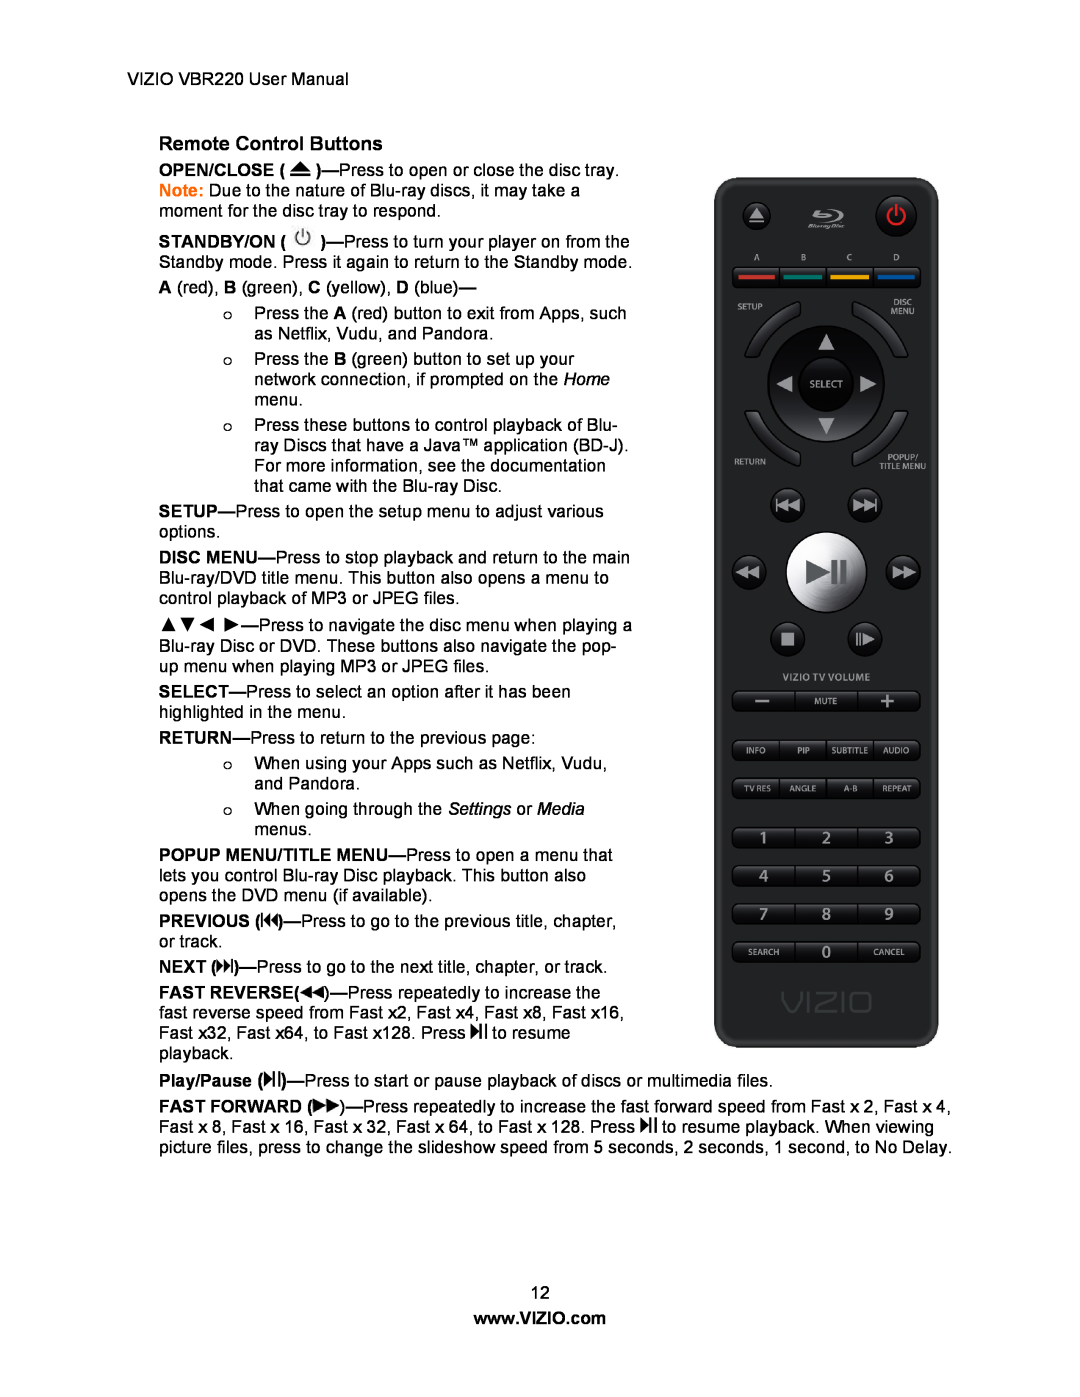 Panasonic VBR220 user manual Remote Control Buttons 